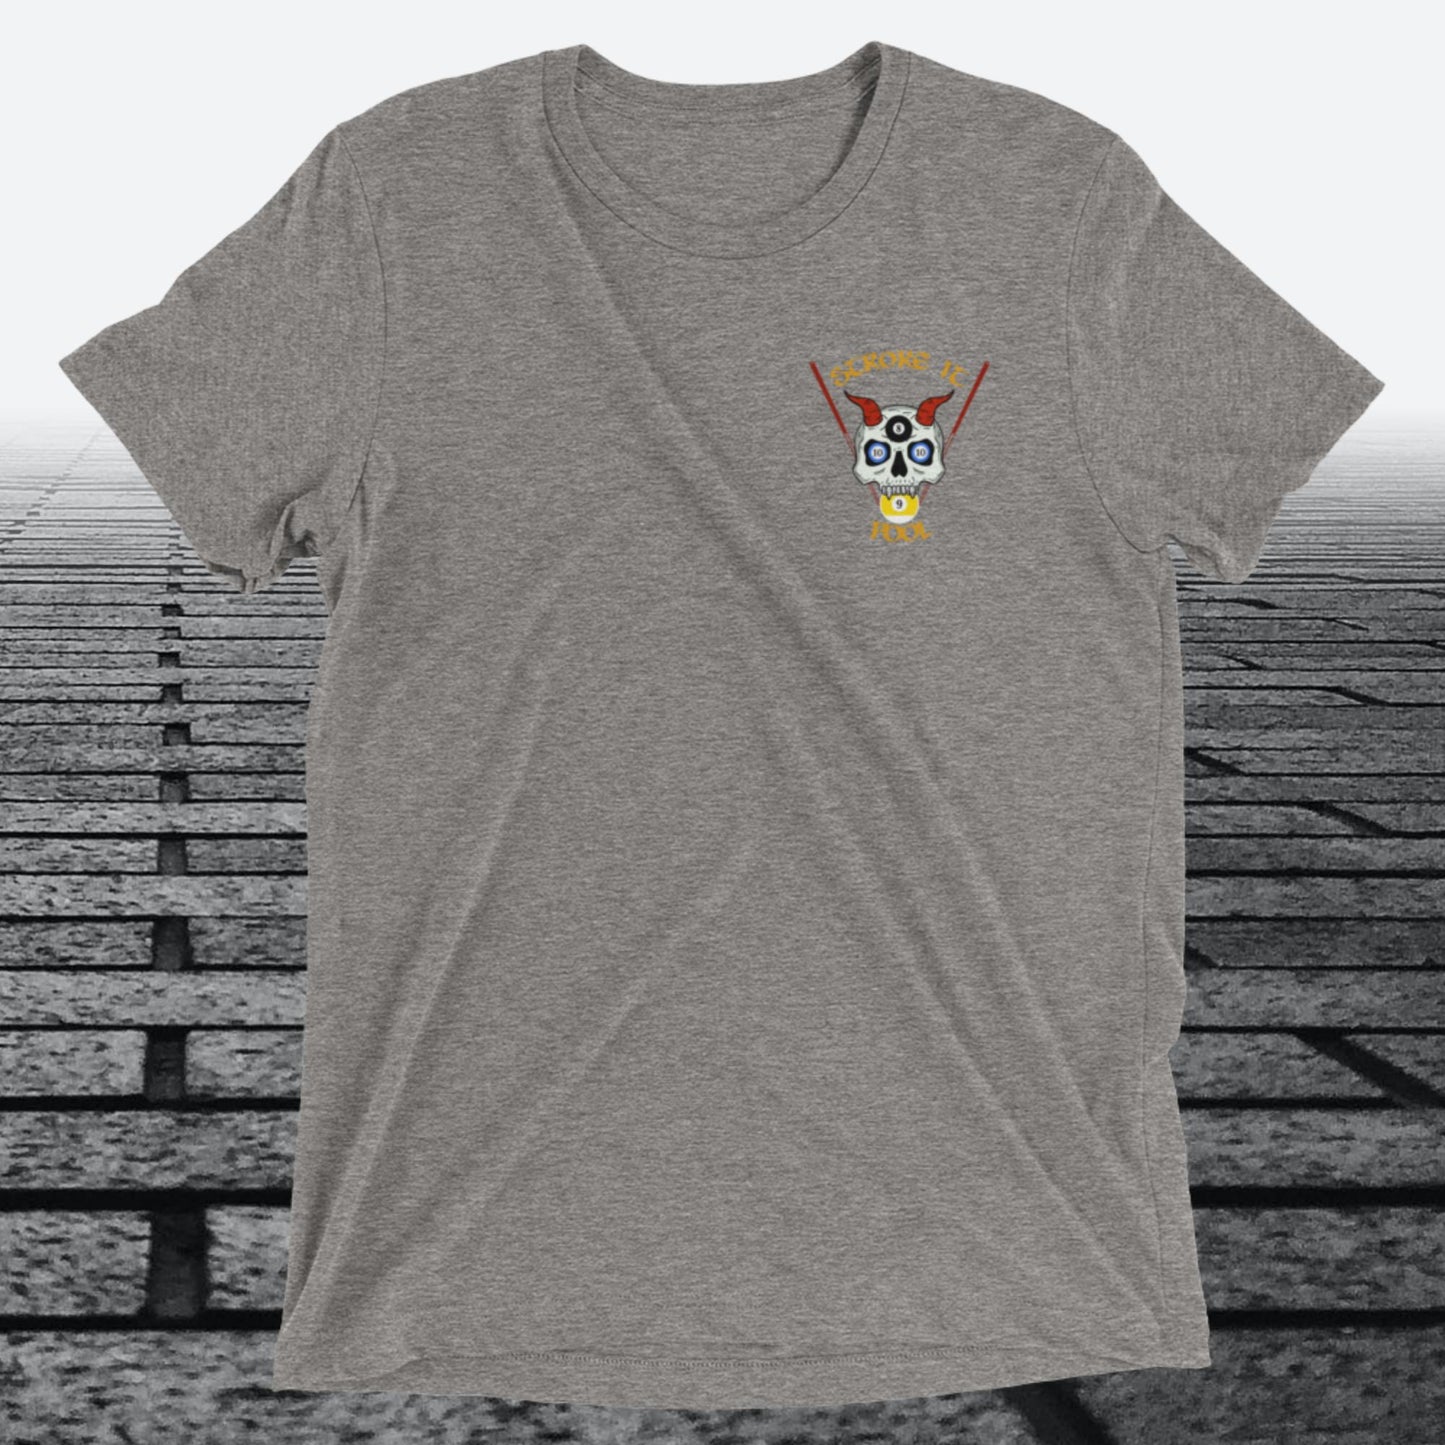 Tyranno-Saur Loser, Logo on the front, Tri-blend t-shirt